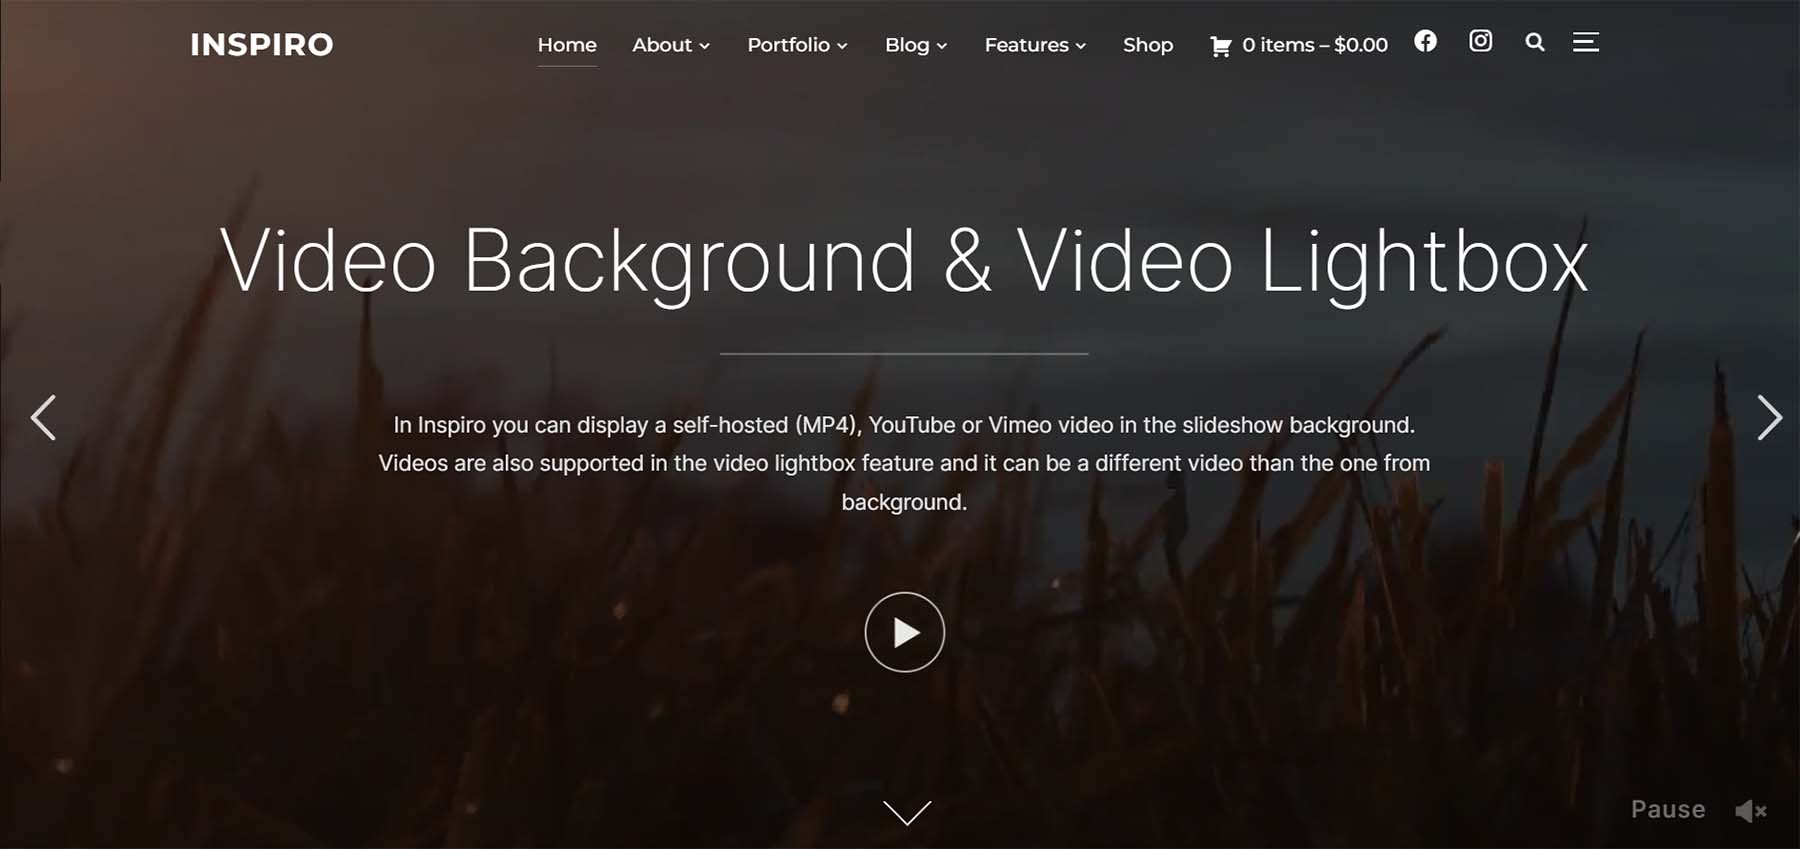 Inspiro Premium, a video and photo focused minimal theme